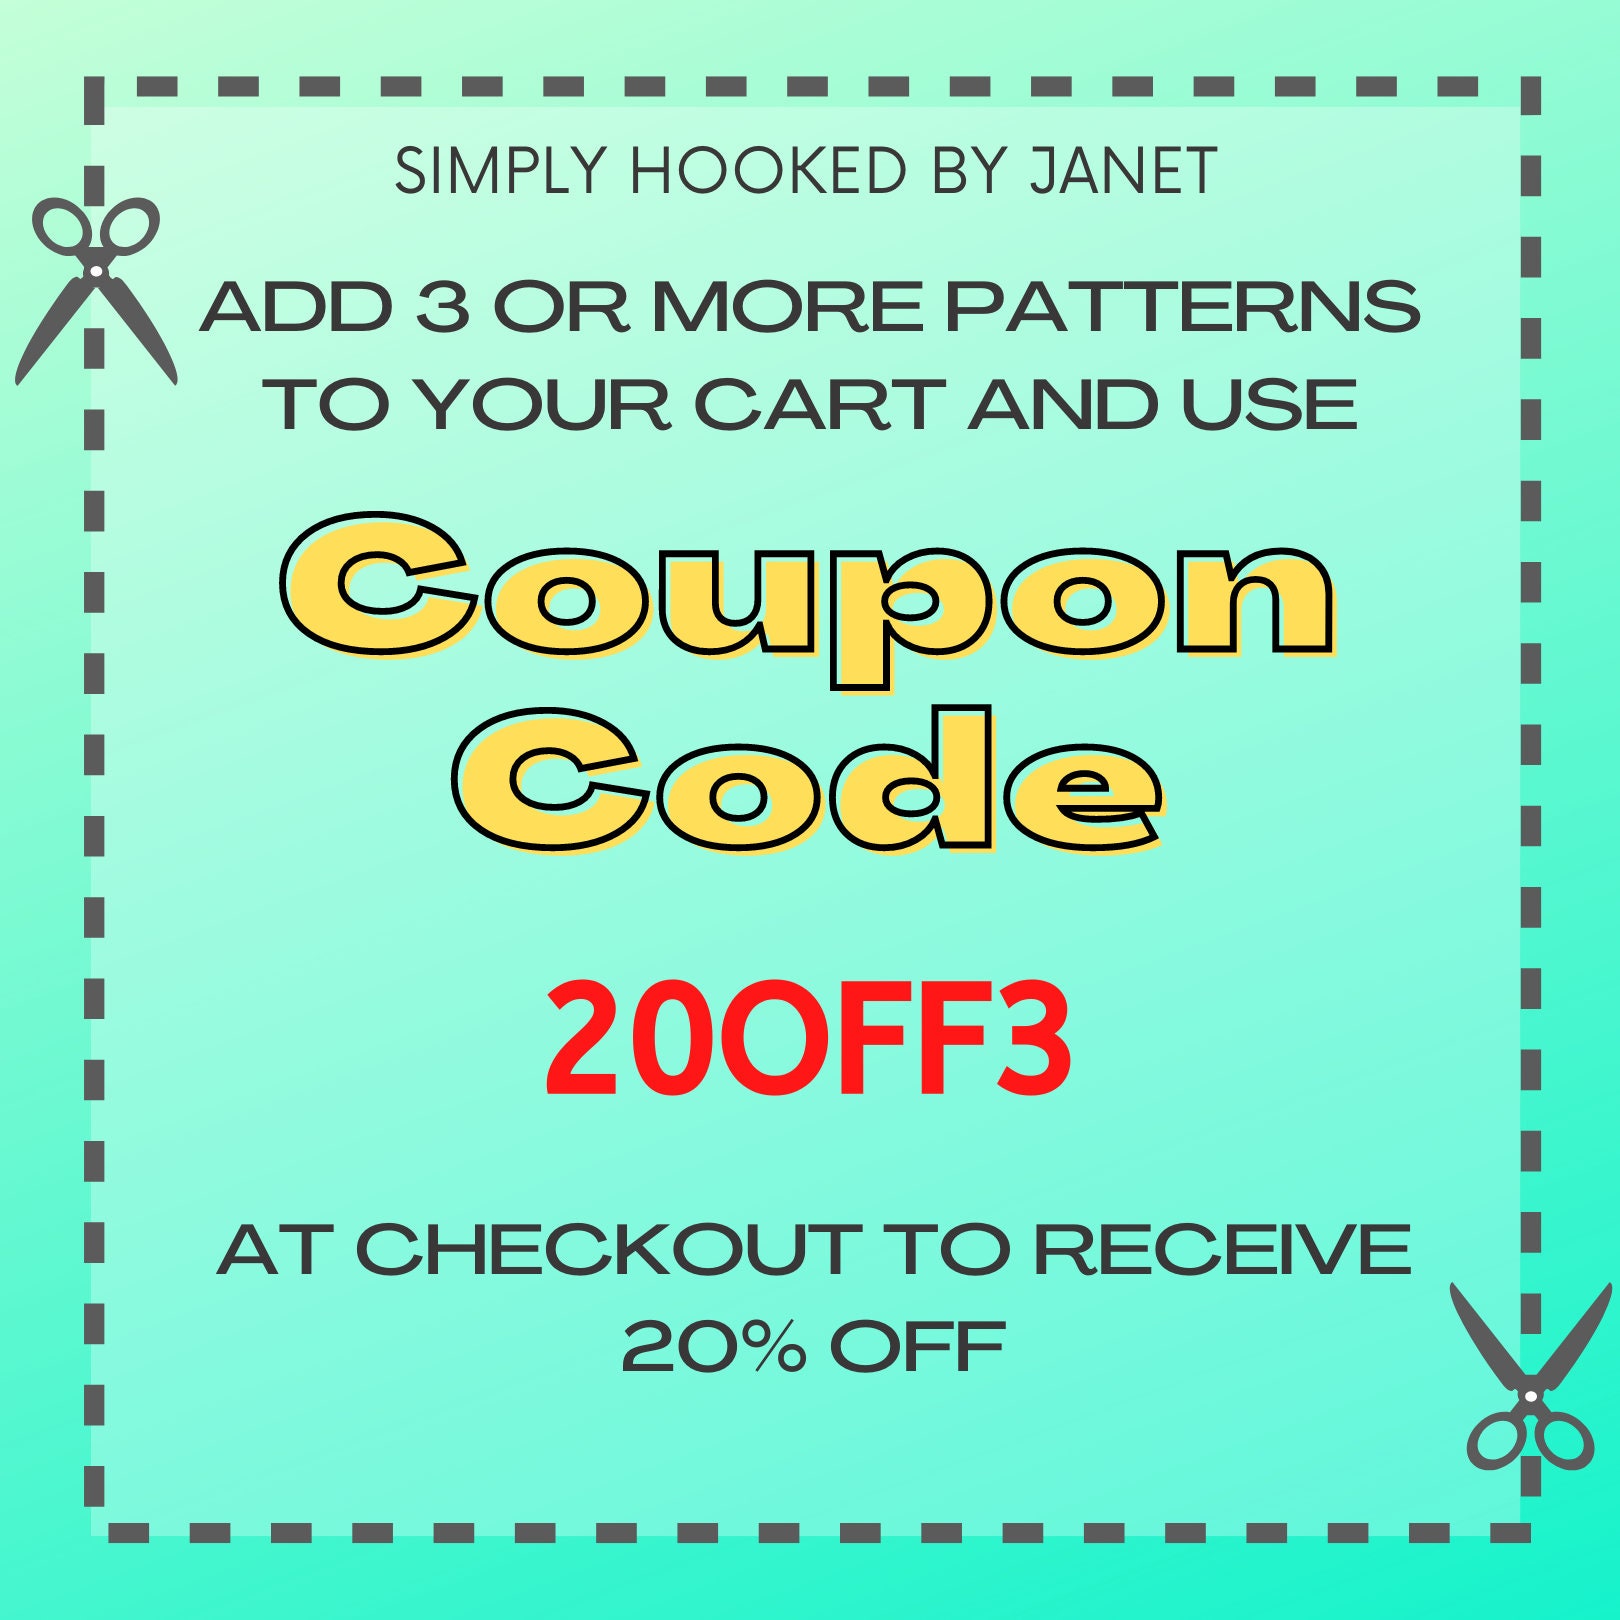 Free Crochet Heart Wind Spinner Pattern - Simply Hooked by Janet